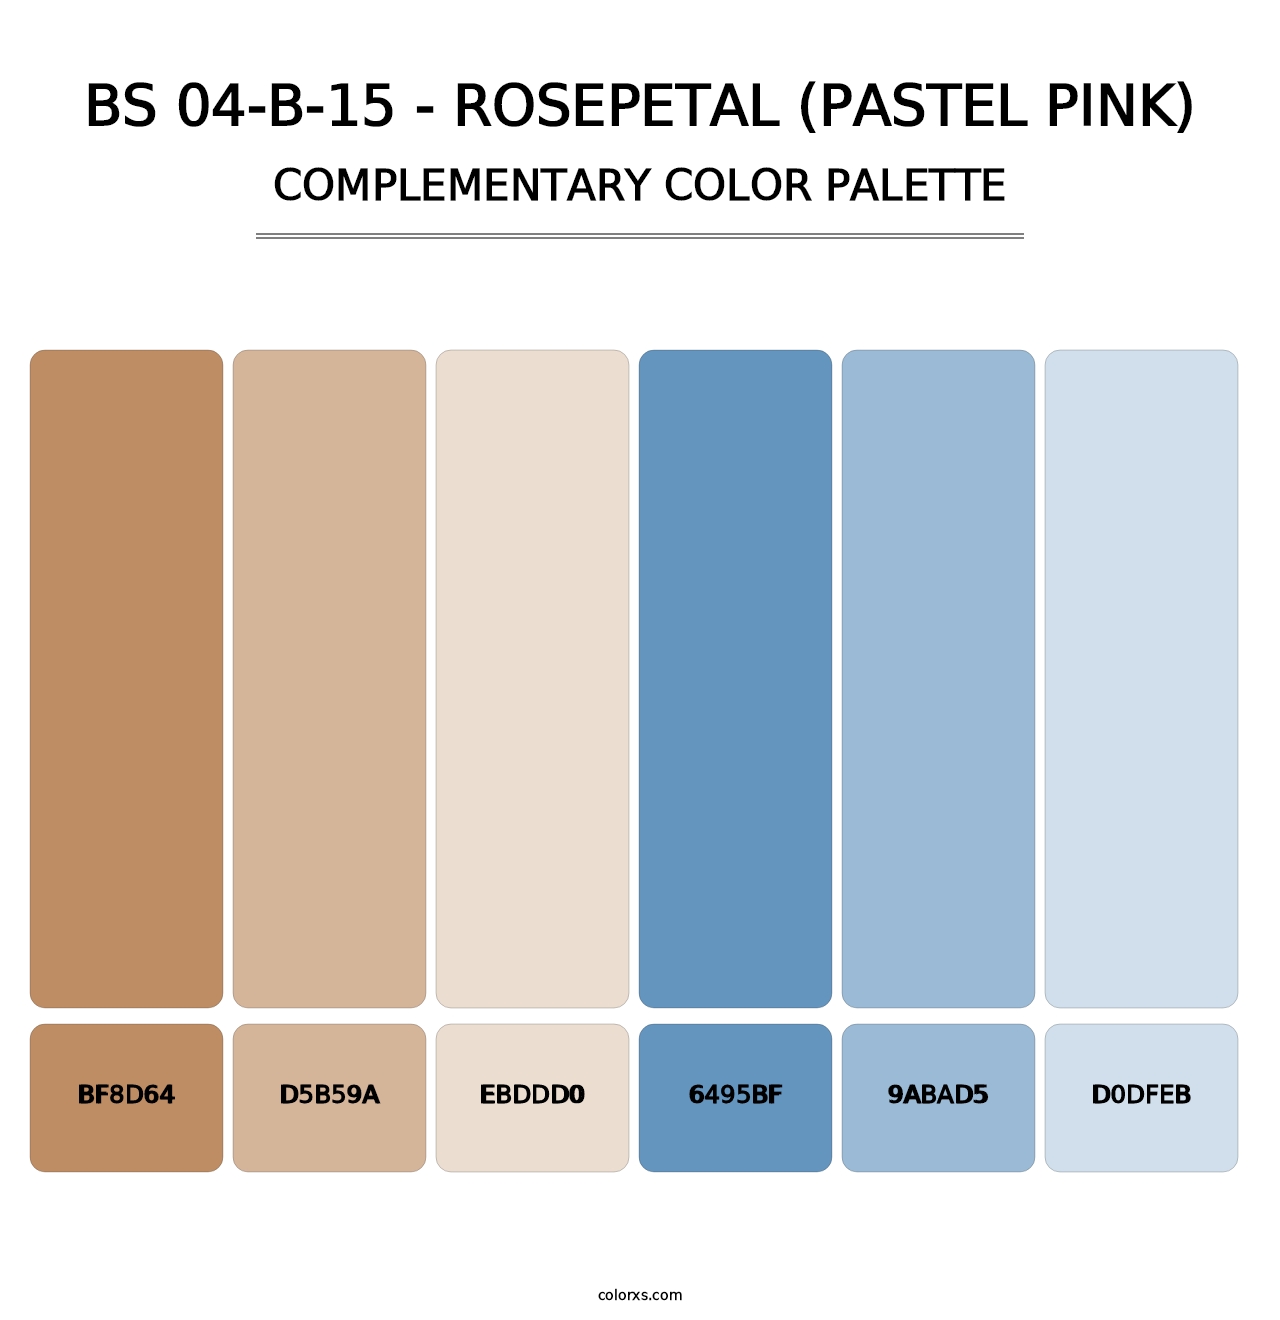 BS 04-B-15 - Rosepetal (Pastel Pink) - Complementary Color Palette